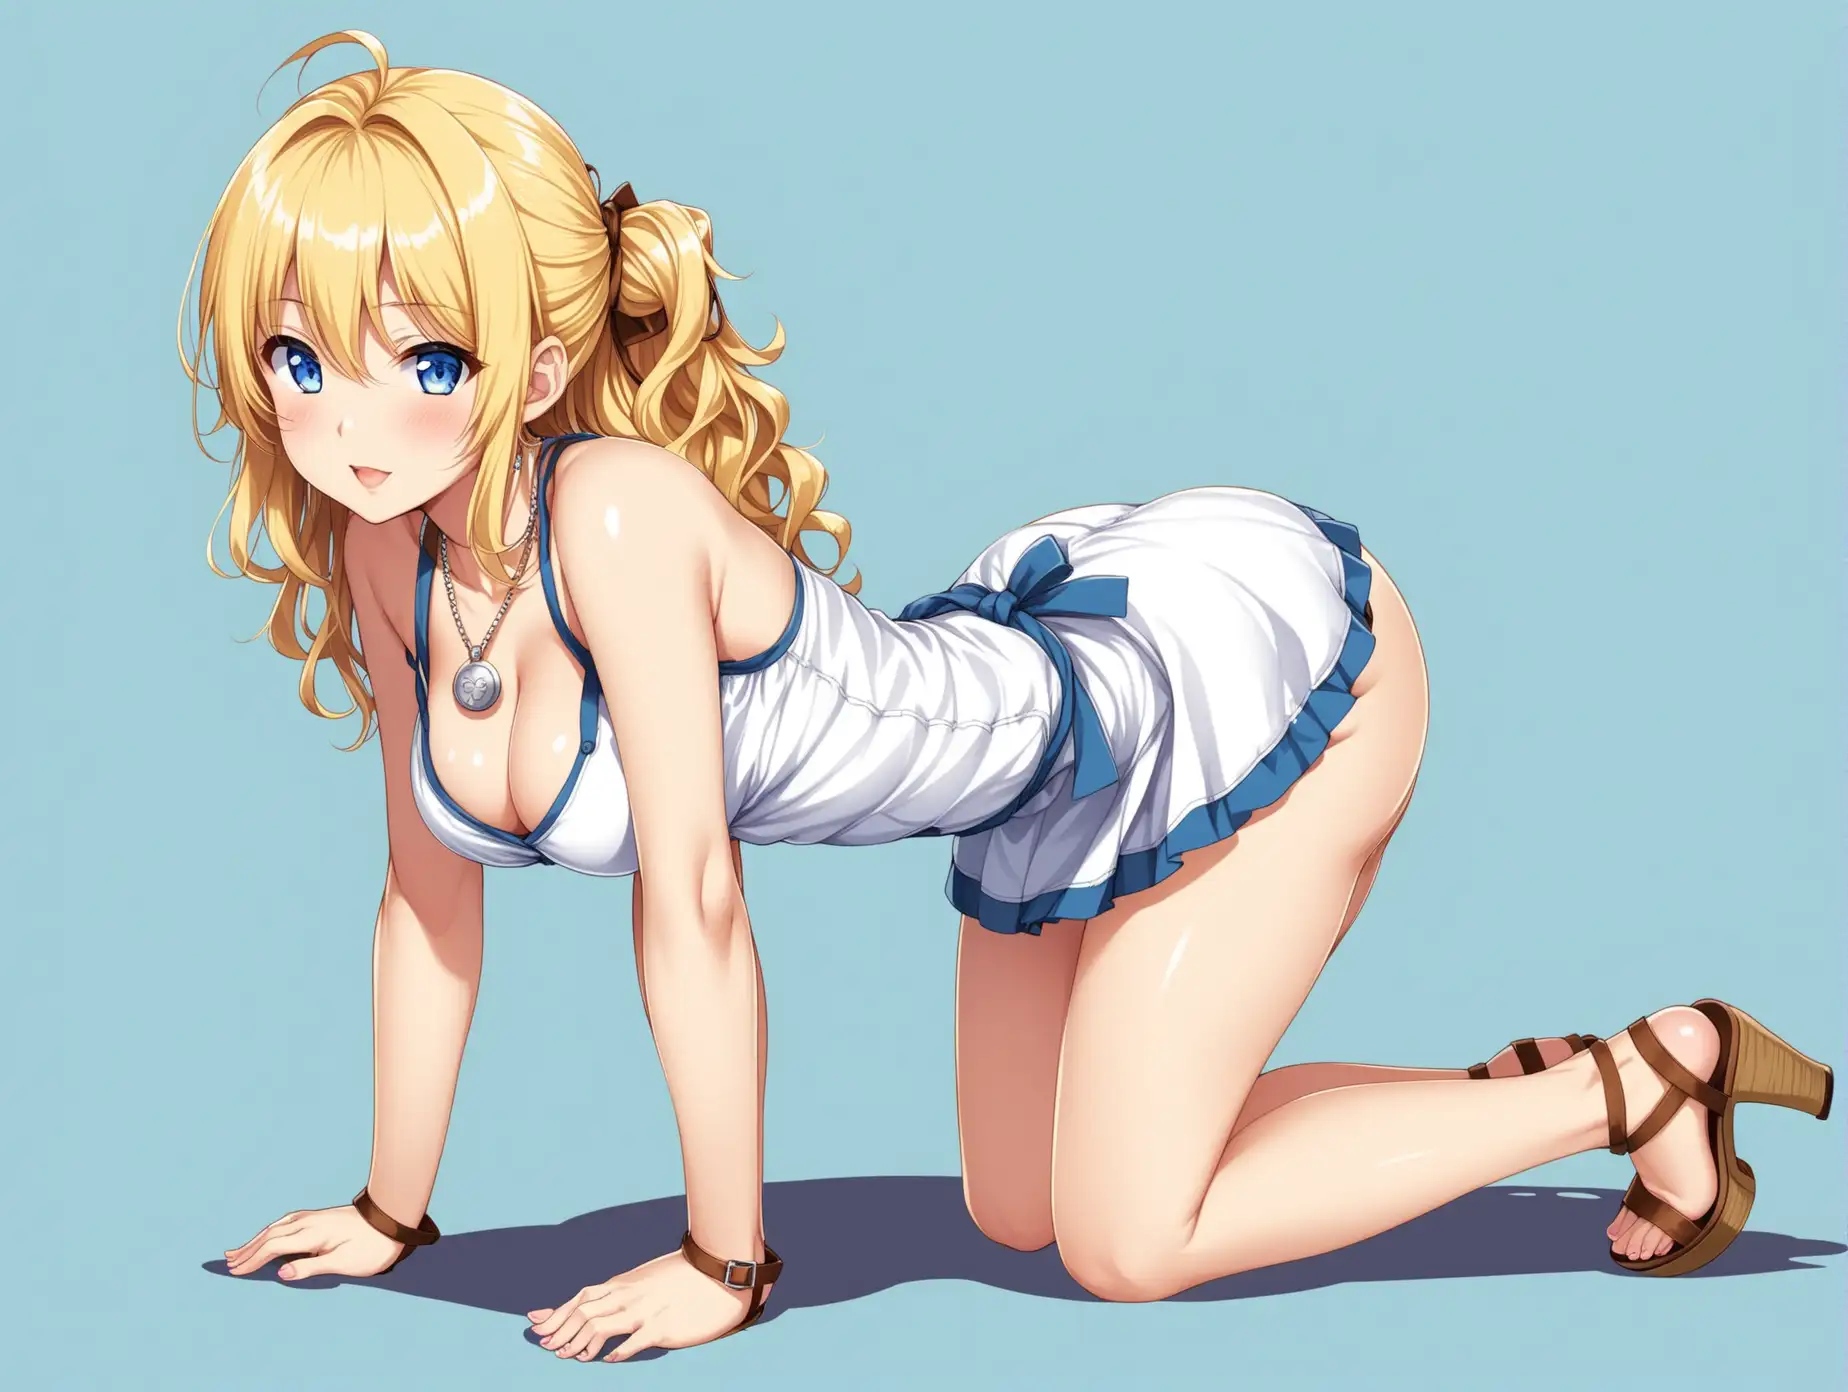 Seductive-Blonde-Anime-Farmer-Girl-in-Short-Dress-and-Wedge-Sandals